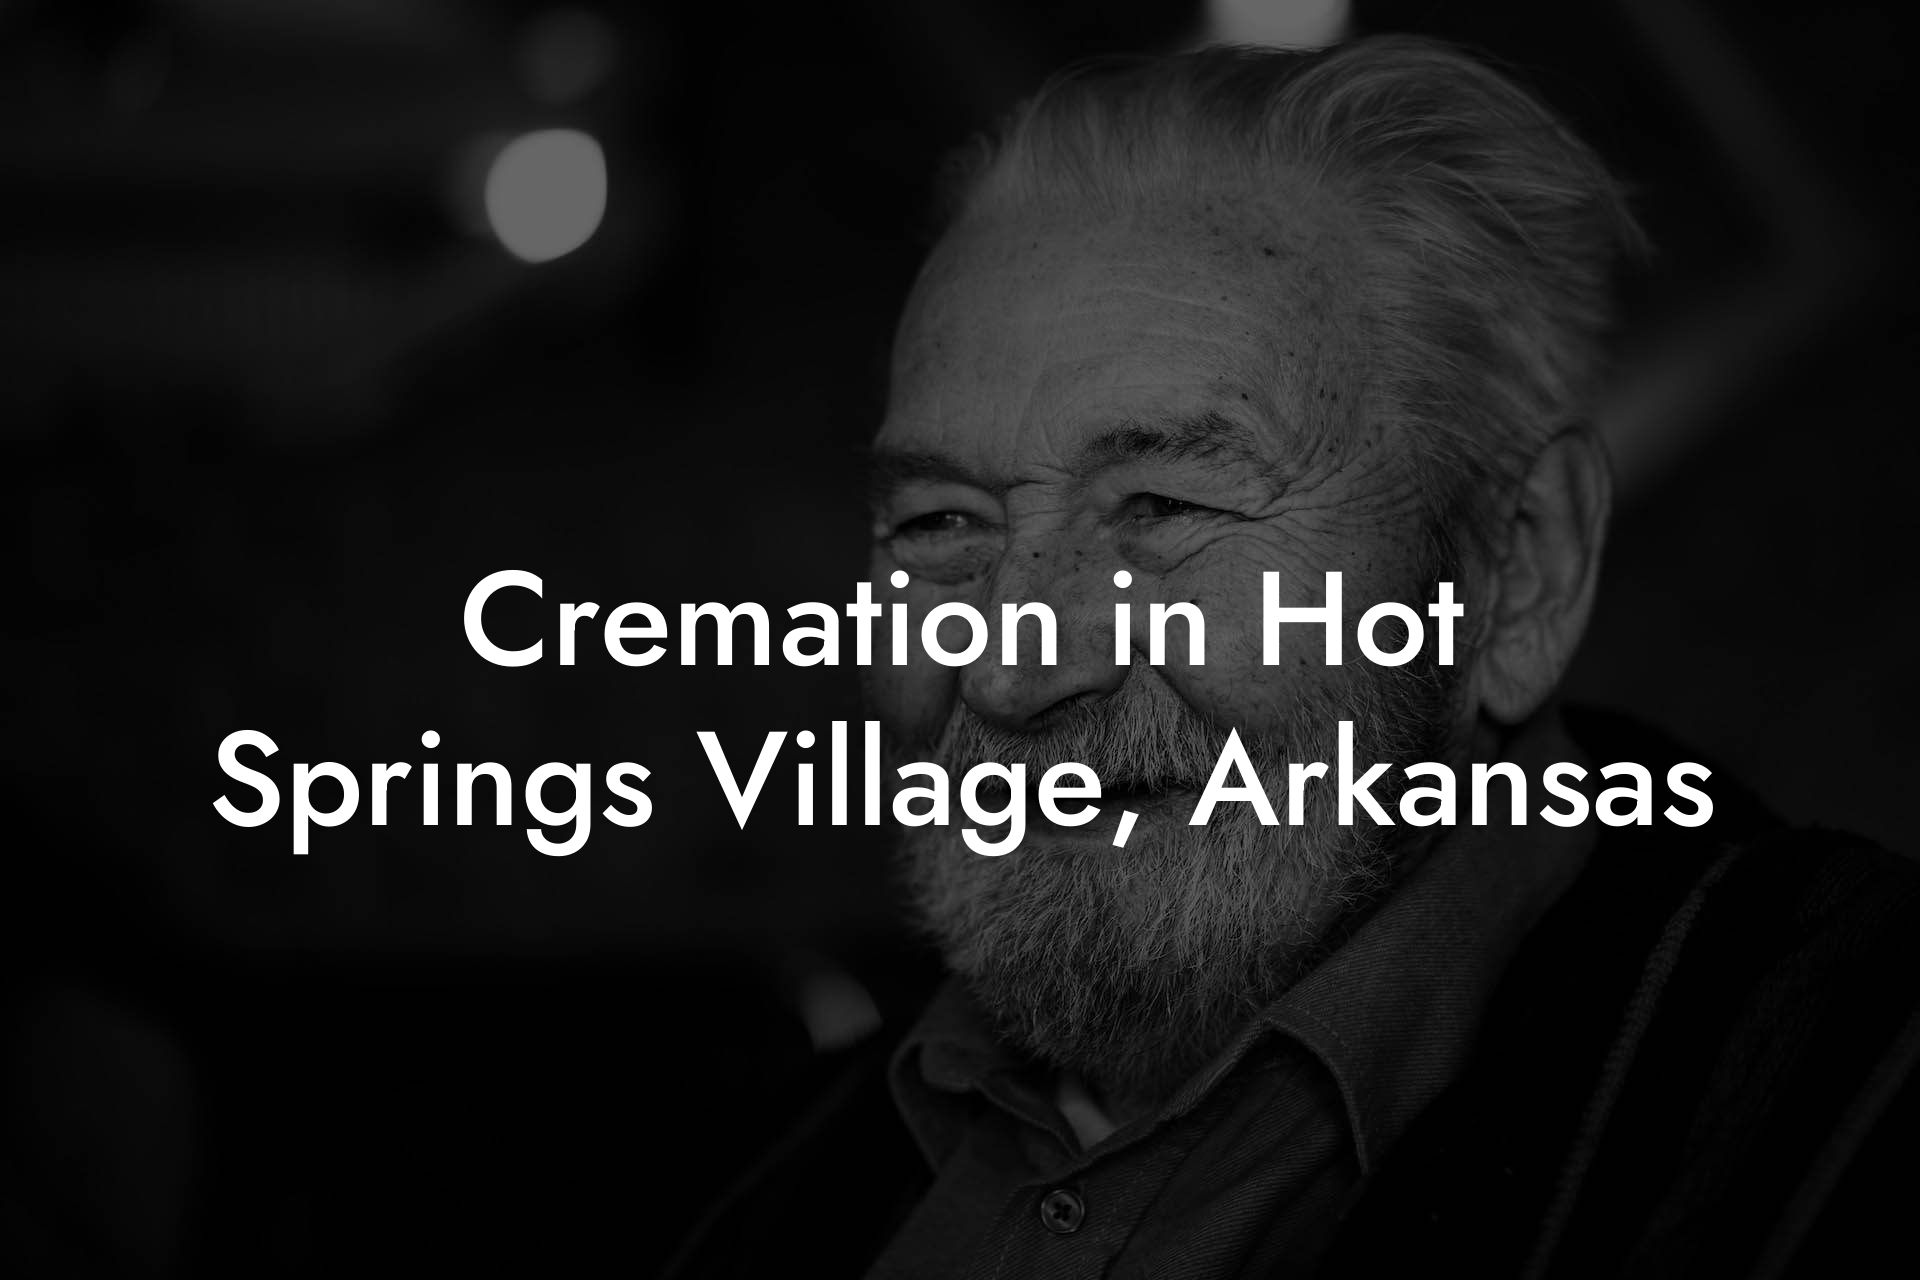 Cremation in Hot Springs Village, Arkansas